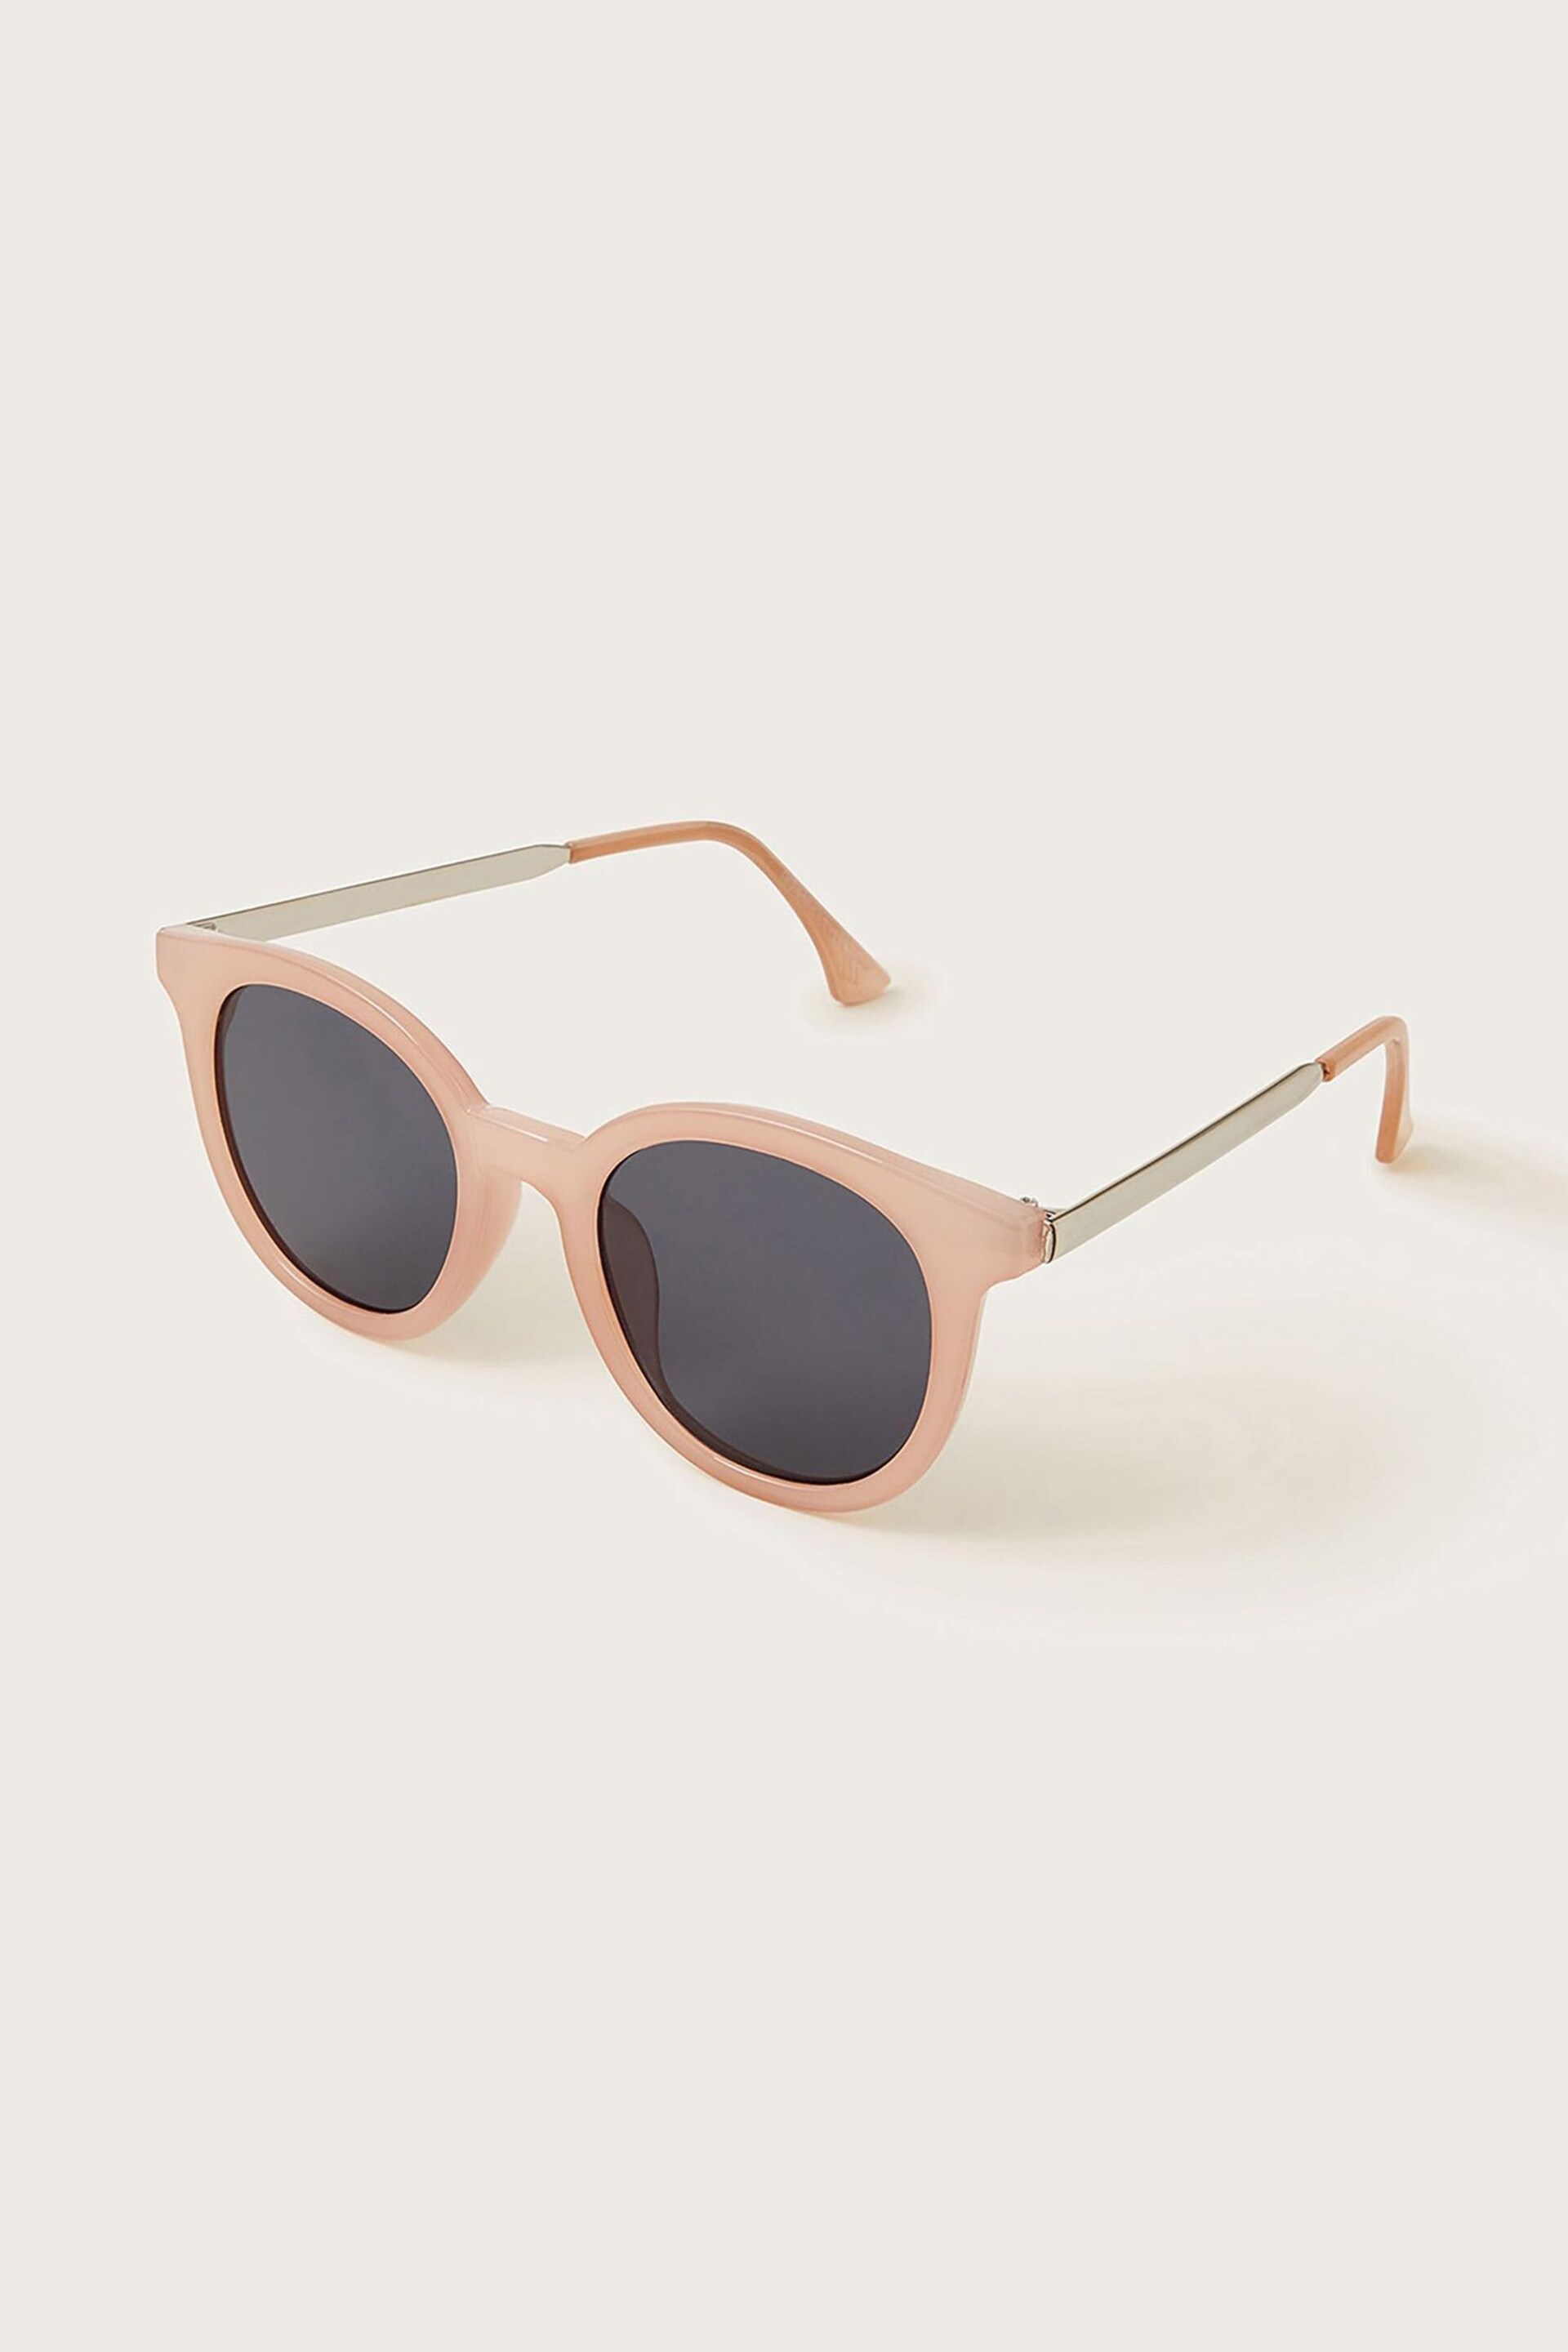 Monsoon Pink Colourblock Frame Sunglasses - Image 1 of 2